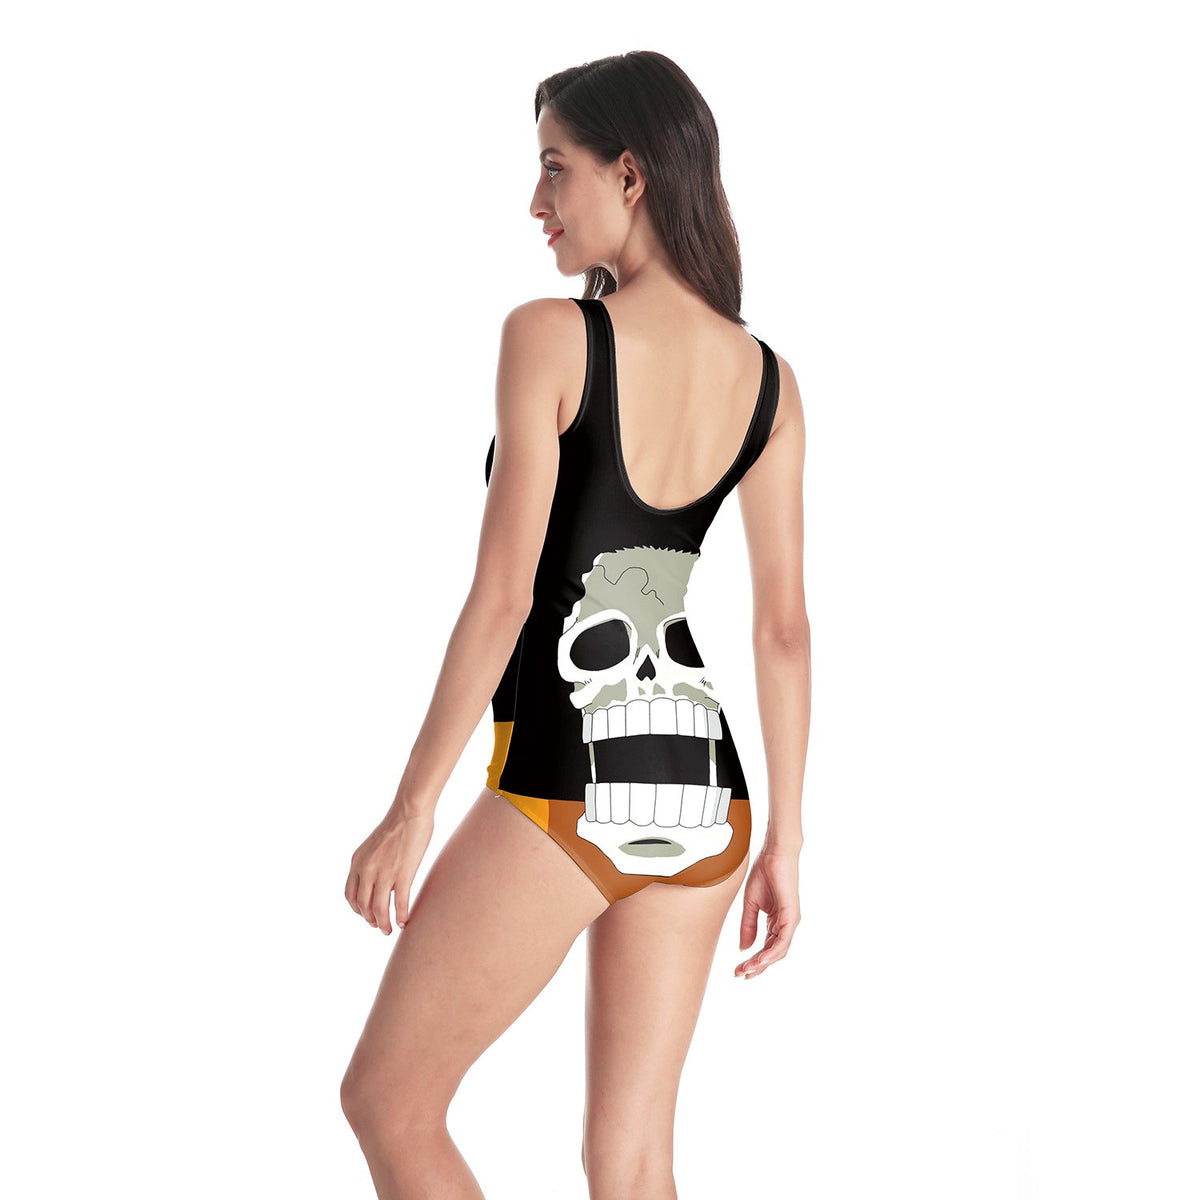 Crew Skull Musician Digital Printing One-Piece Swimsuit